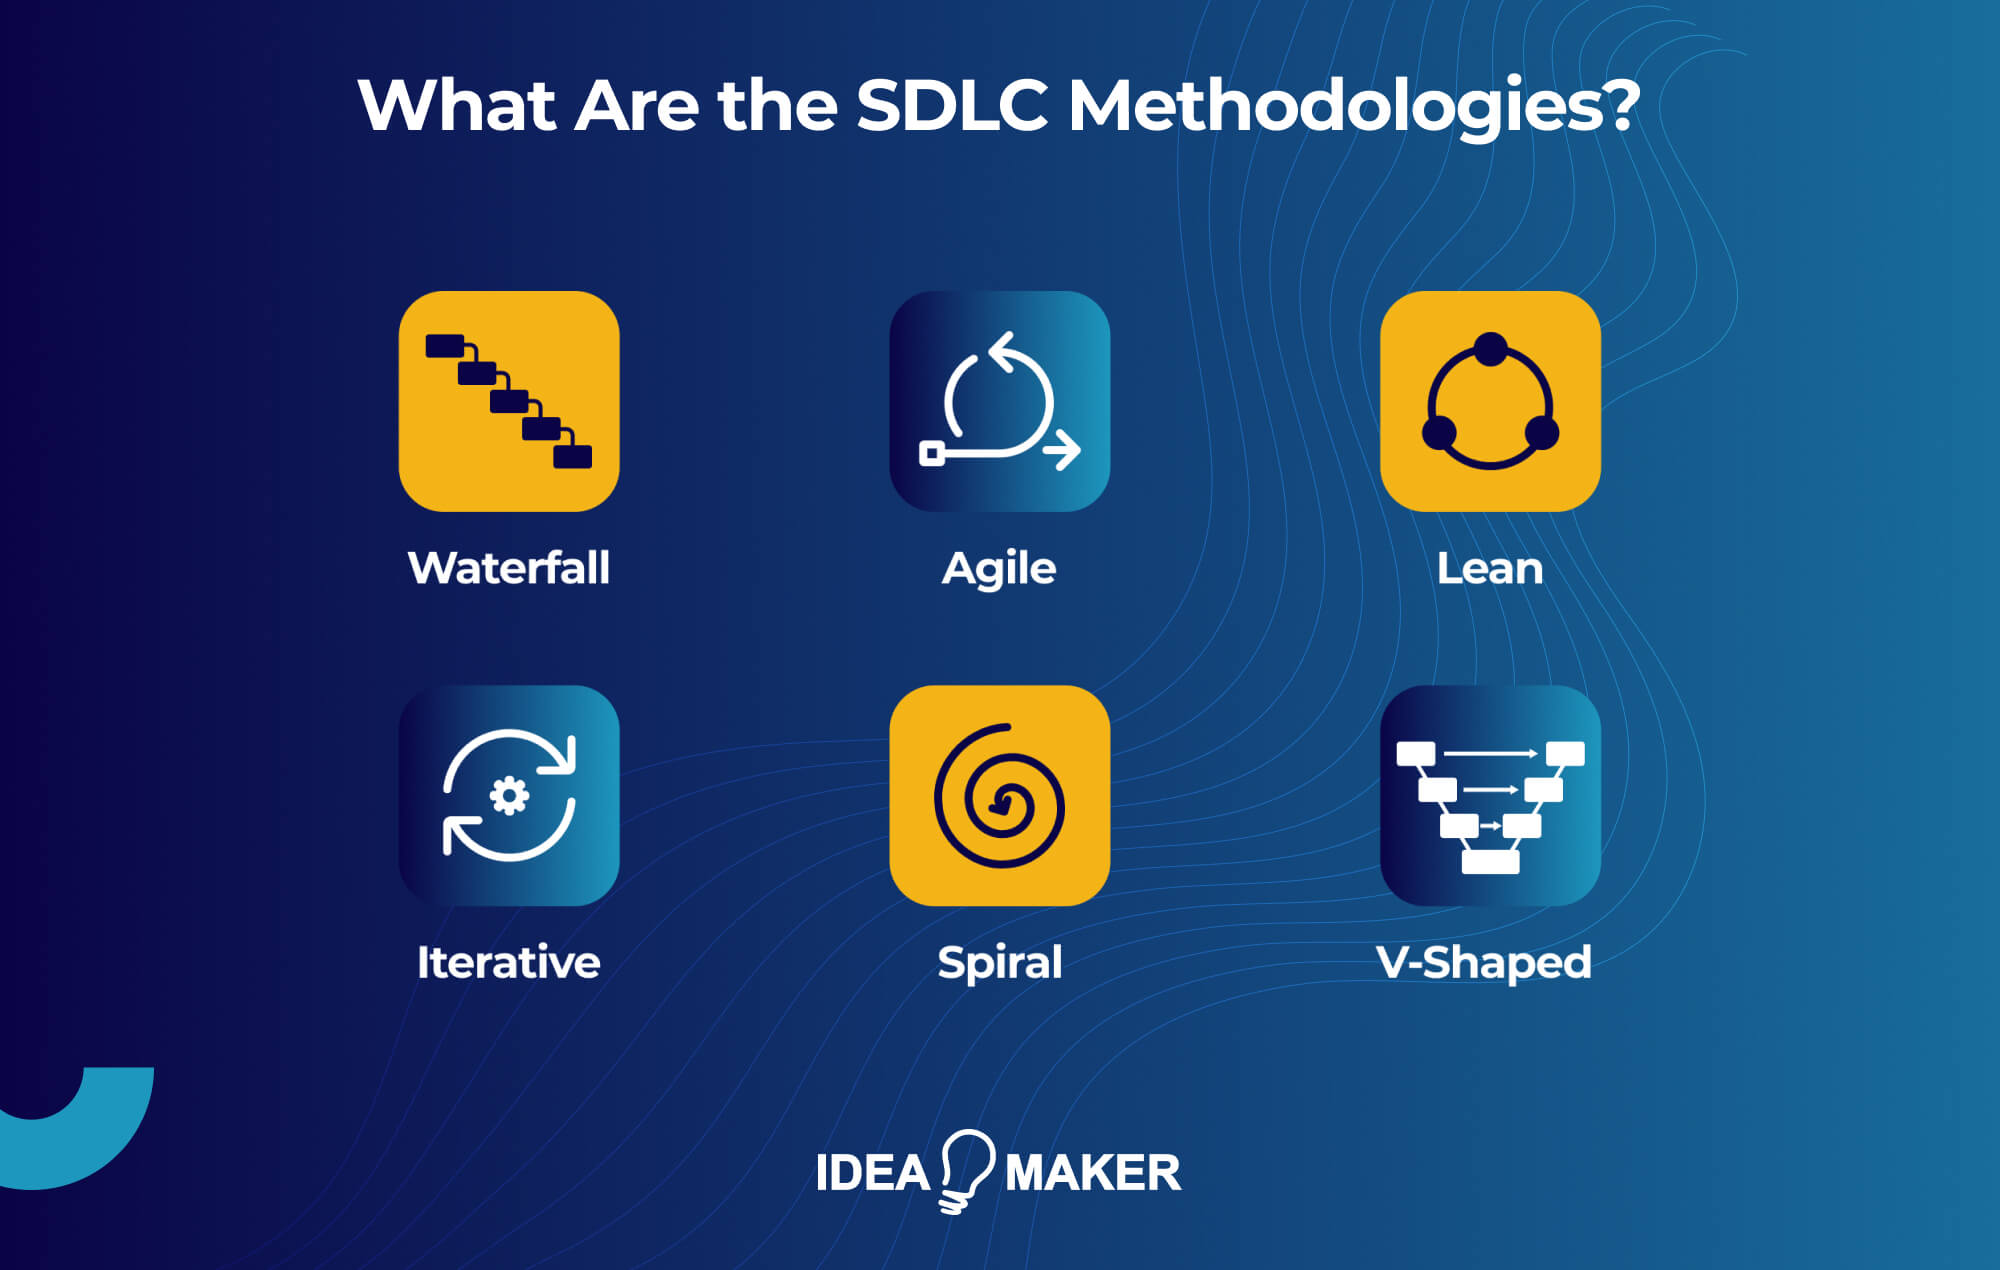 Ideamaker - What Are the SDLC Methodologies_